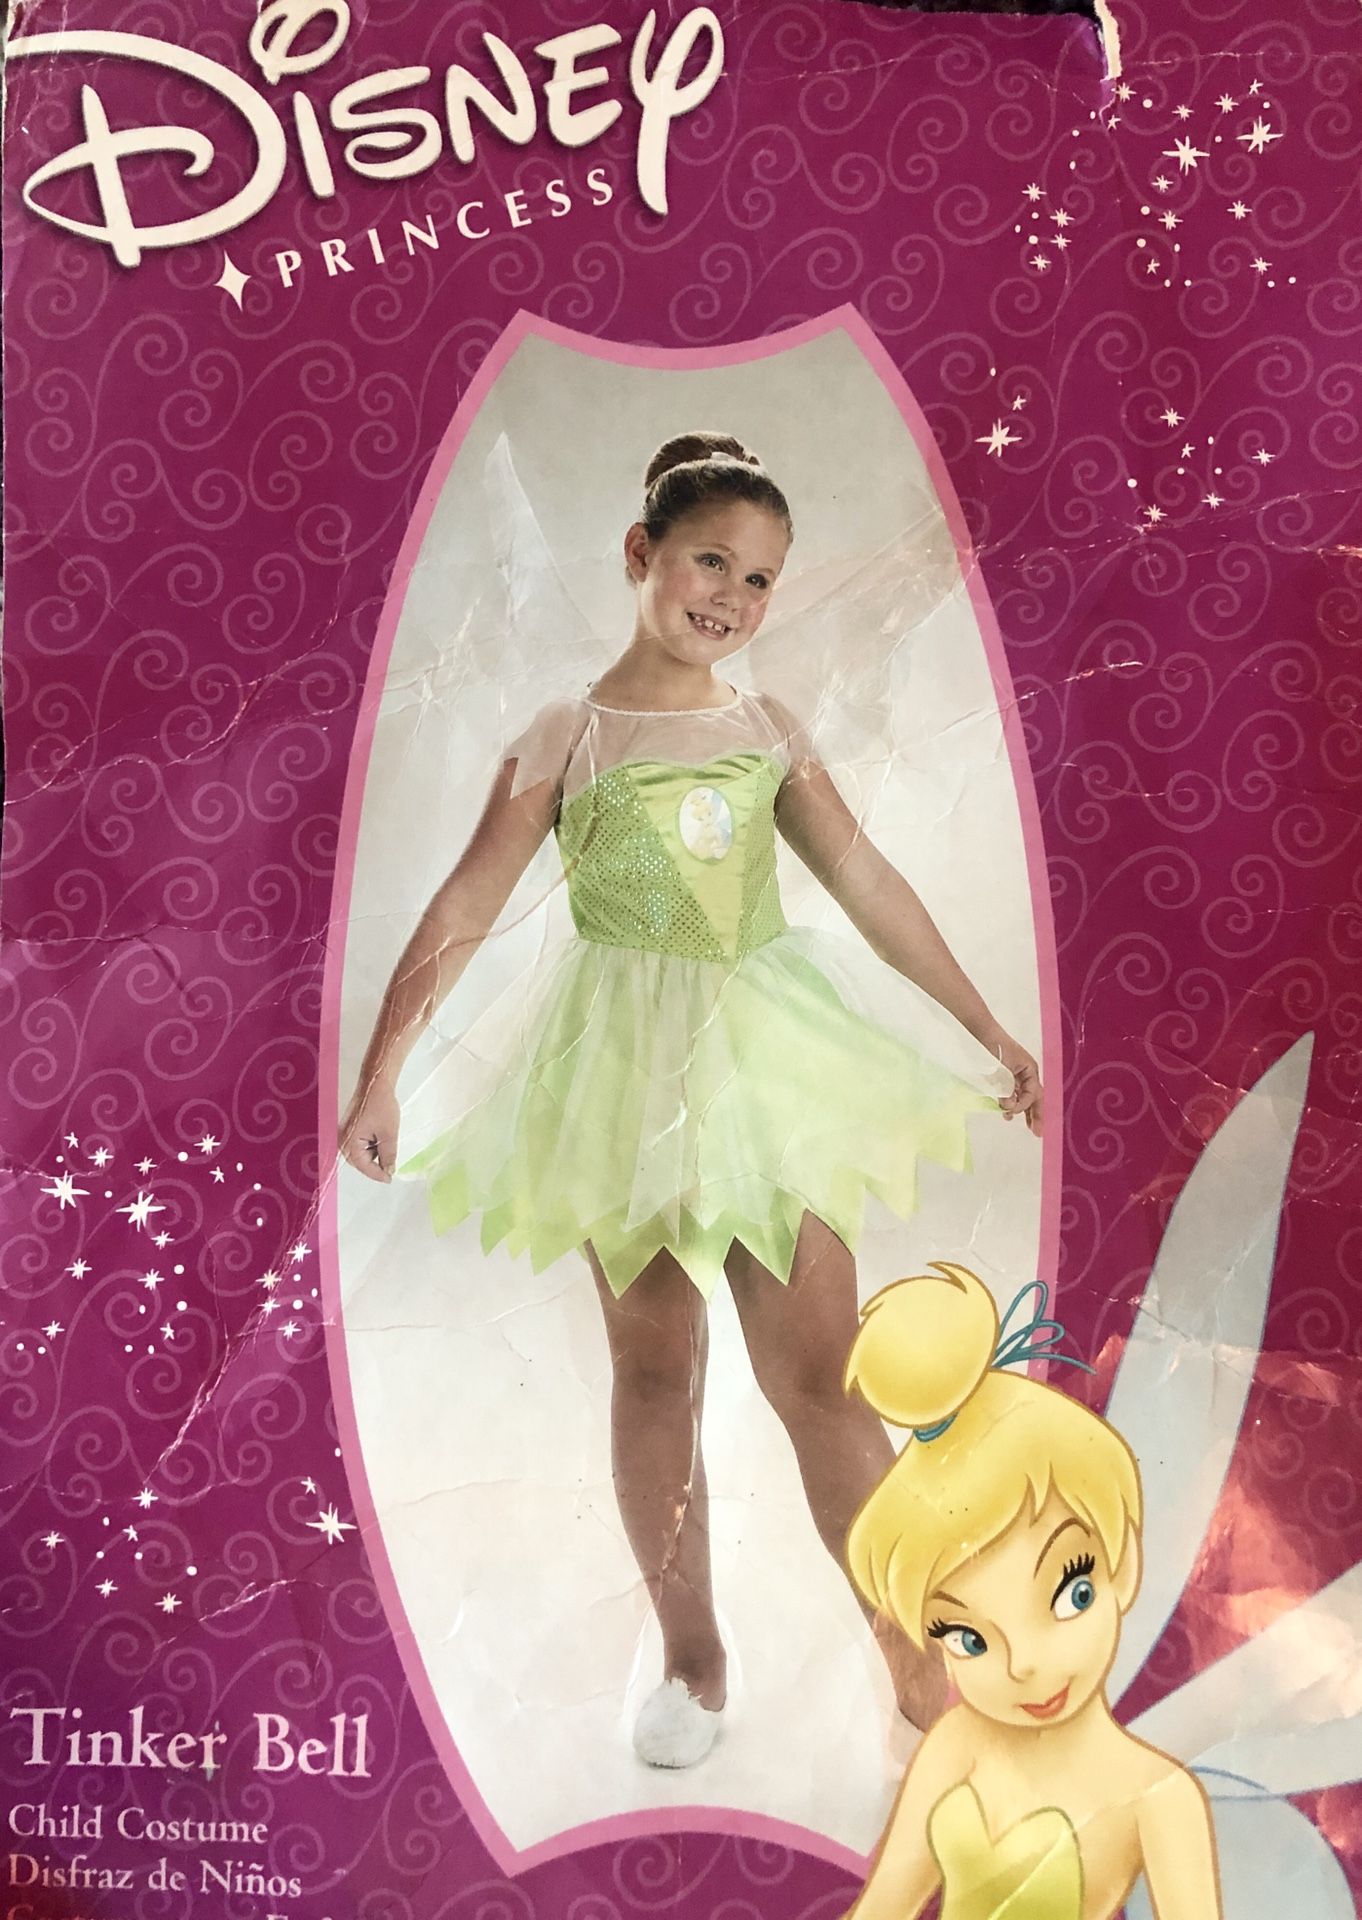 Tinker bell costume child 4-6